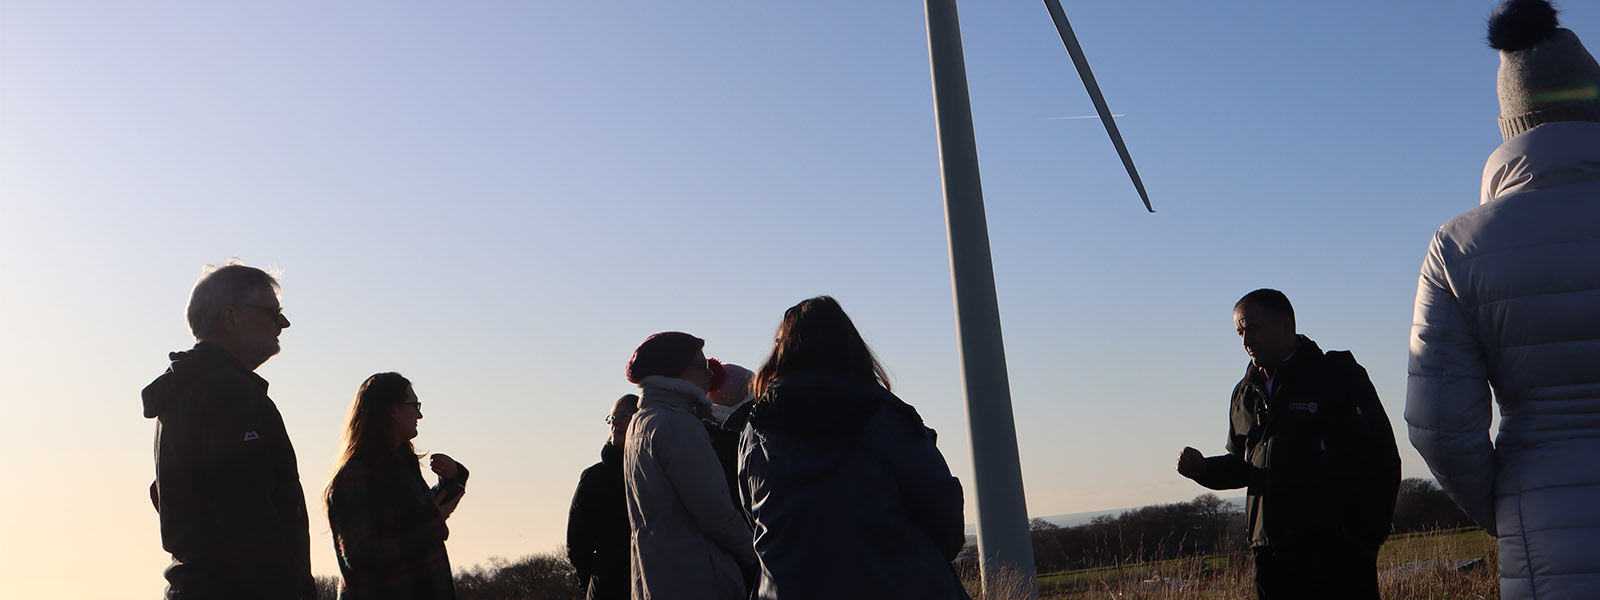 鶹Ƶ's wind turbine with people attending a talk on sustainability.